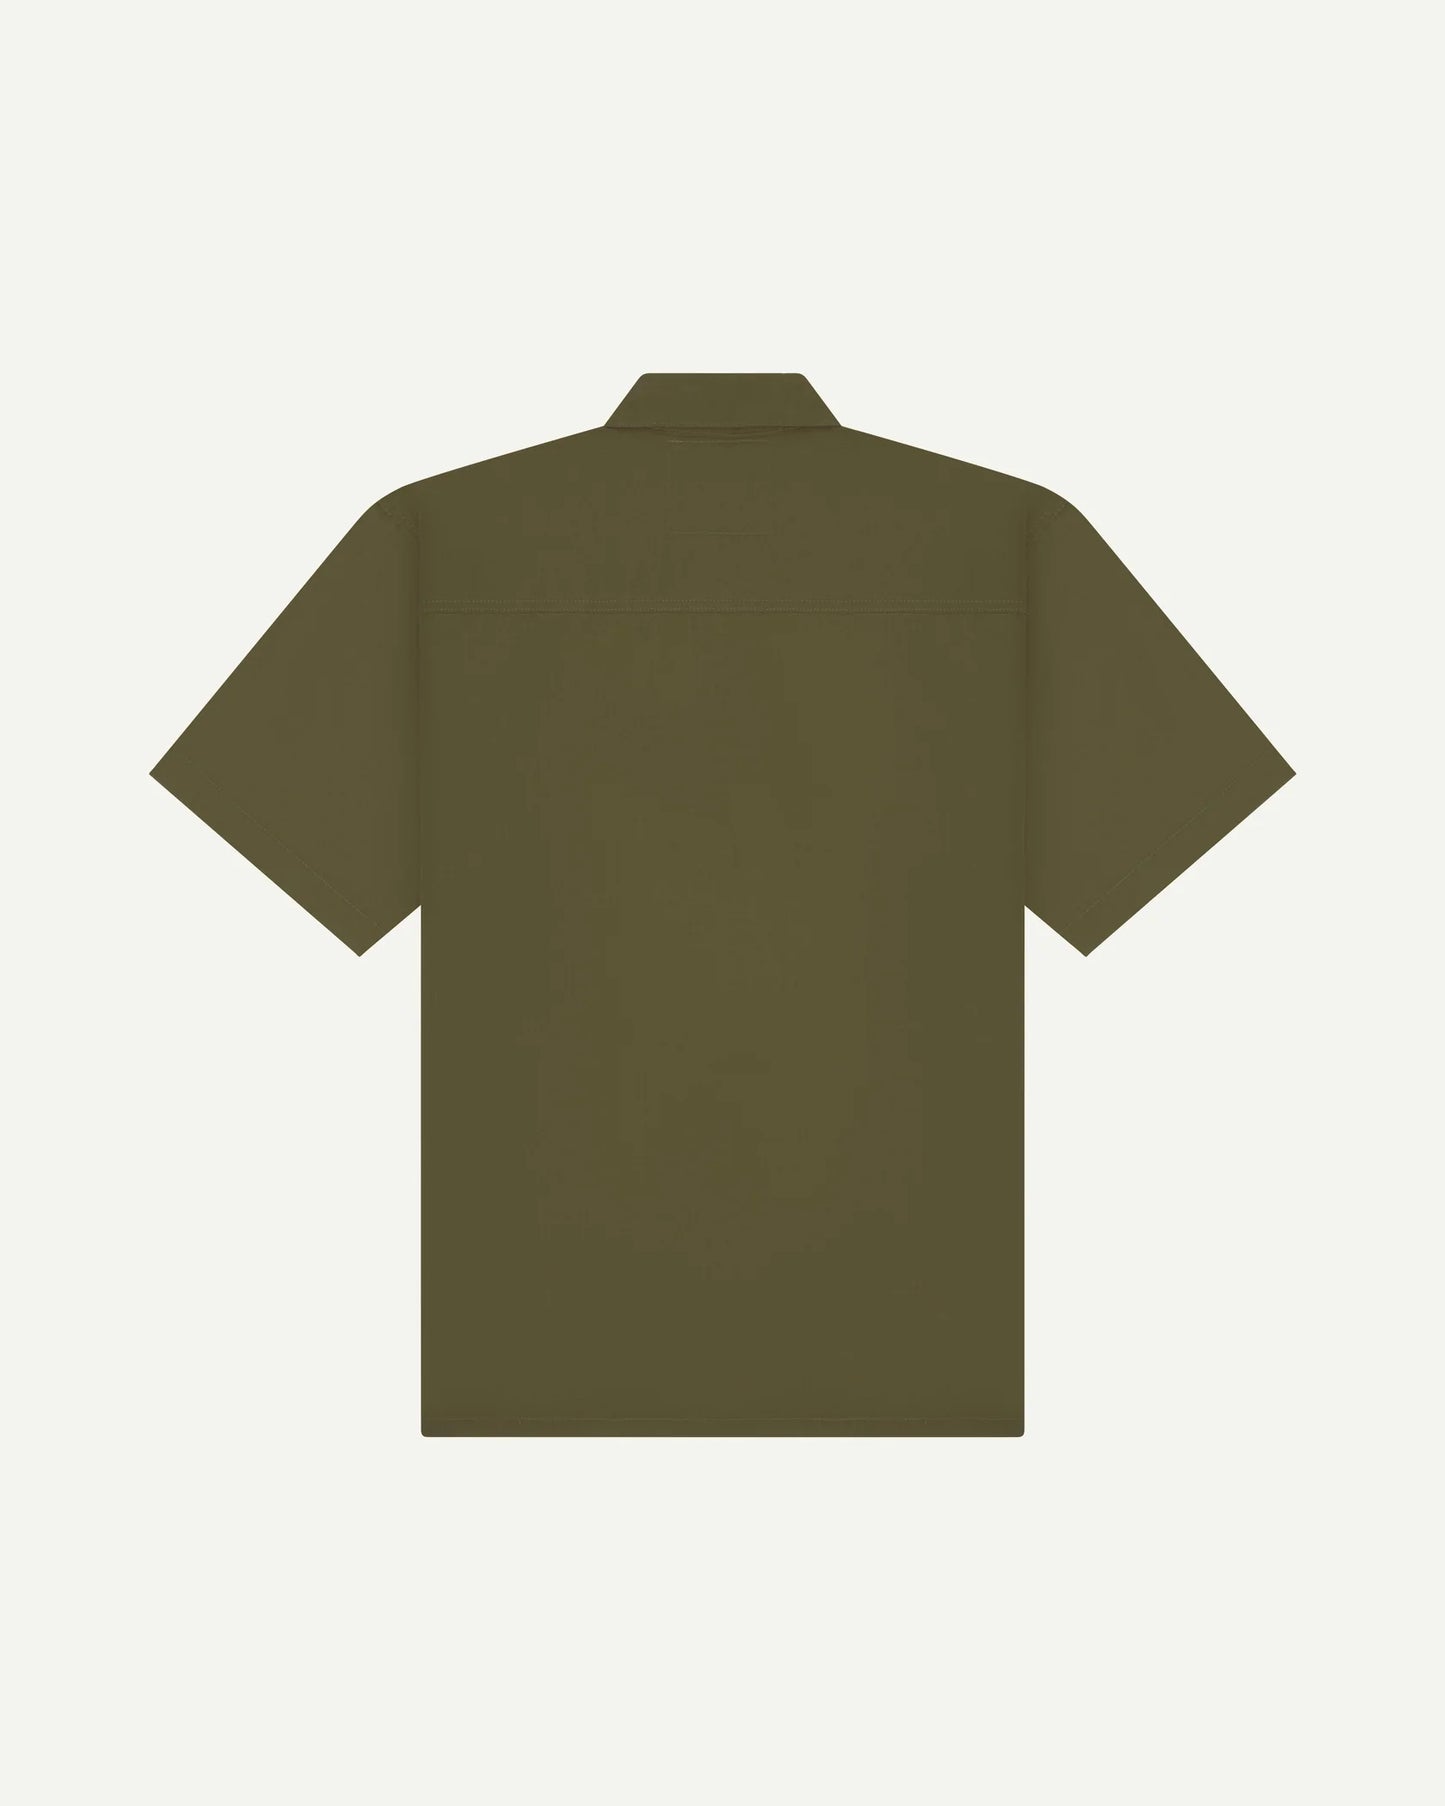 6003 lightweight short sleeve shirt - olive